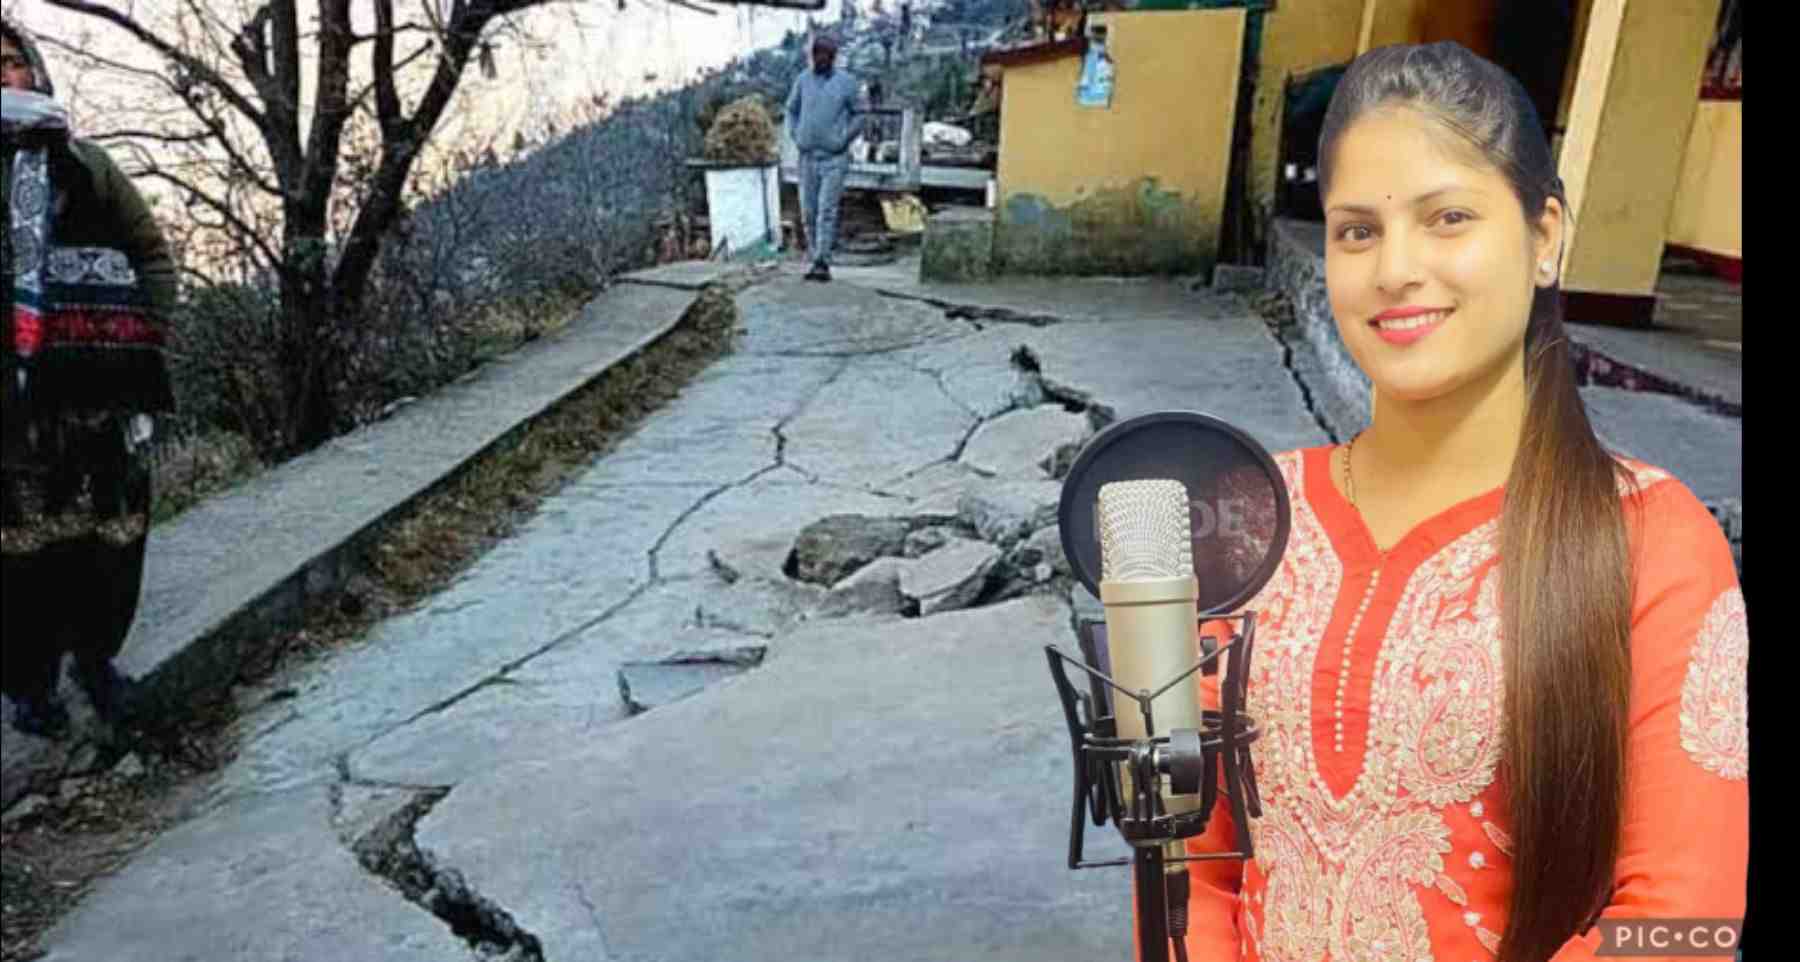 new Garhwali song joshimath aapda by young singer Anisha Rangad on Joshimath disaster 2023. Joshimath garhwali song 2023